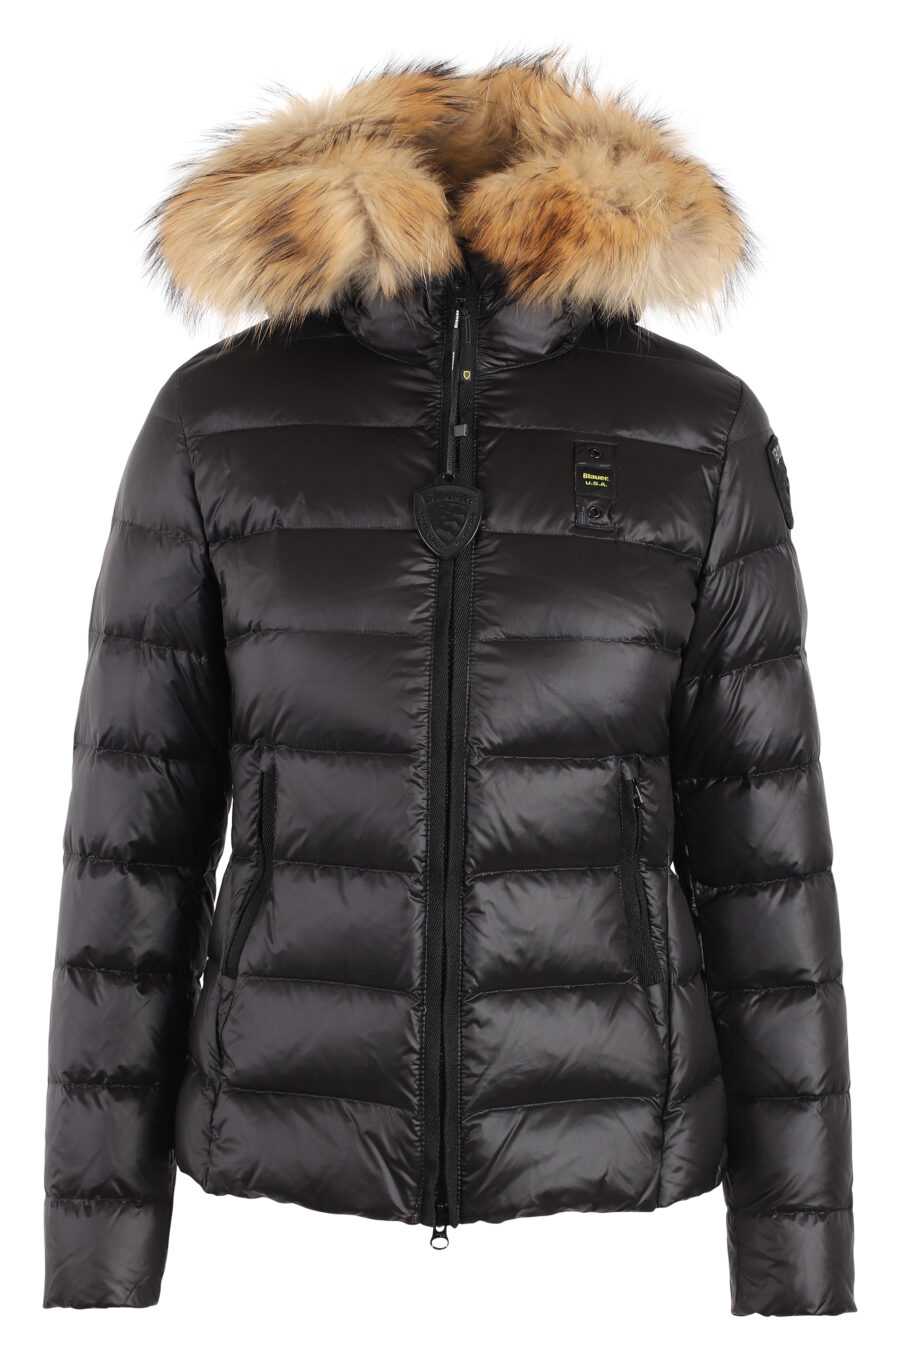 Black fur hooded jacket with reddish-brown interior - IMG 4925